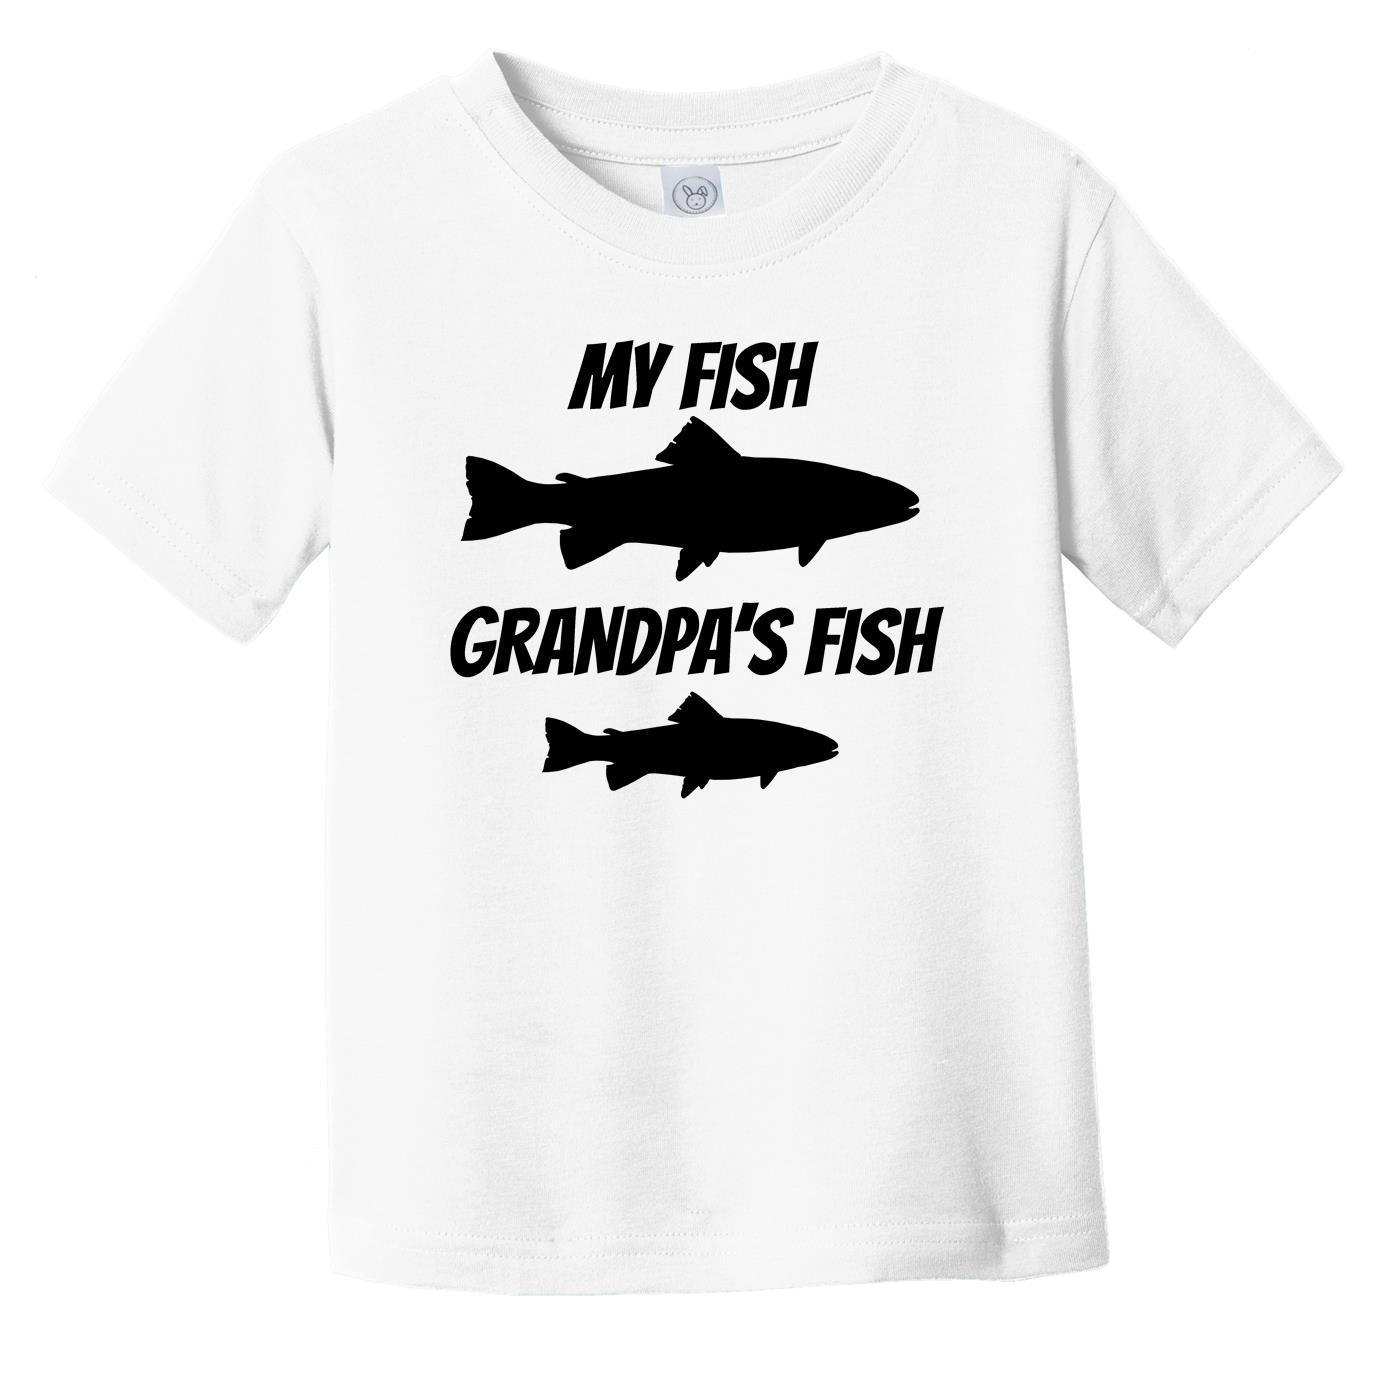 My Fish Grandpa's Fish Fishing Infant Toddler T-Shirt - Grandson Infant Toddler Shirt 12 Months / White